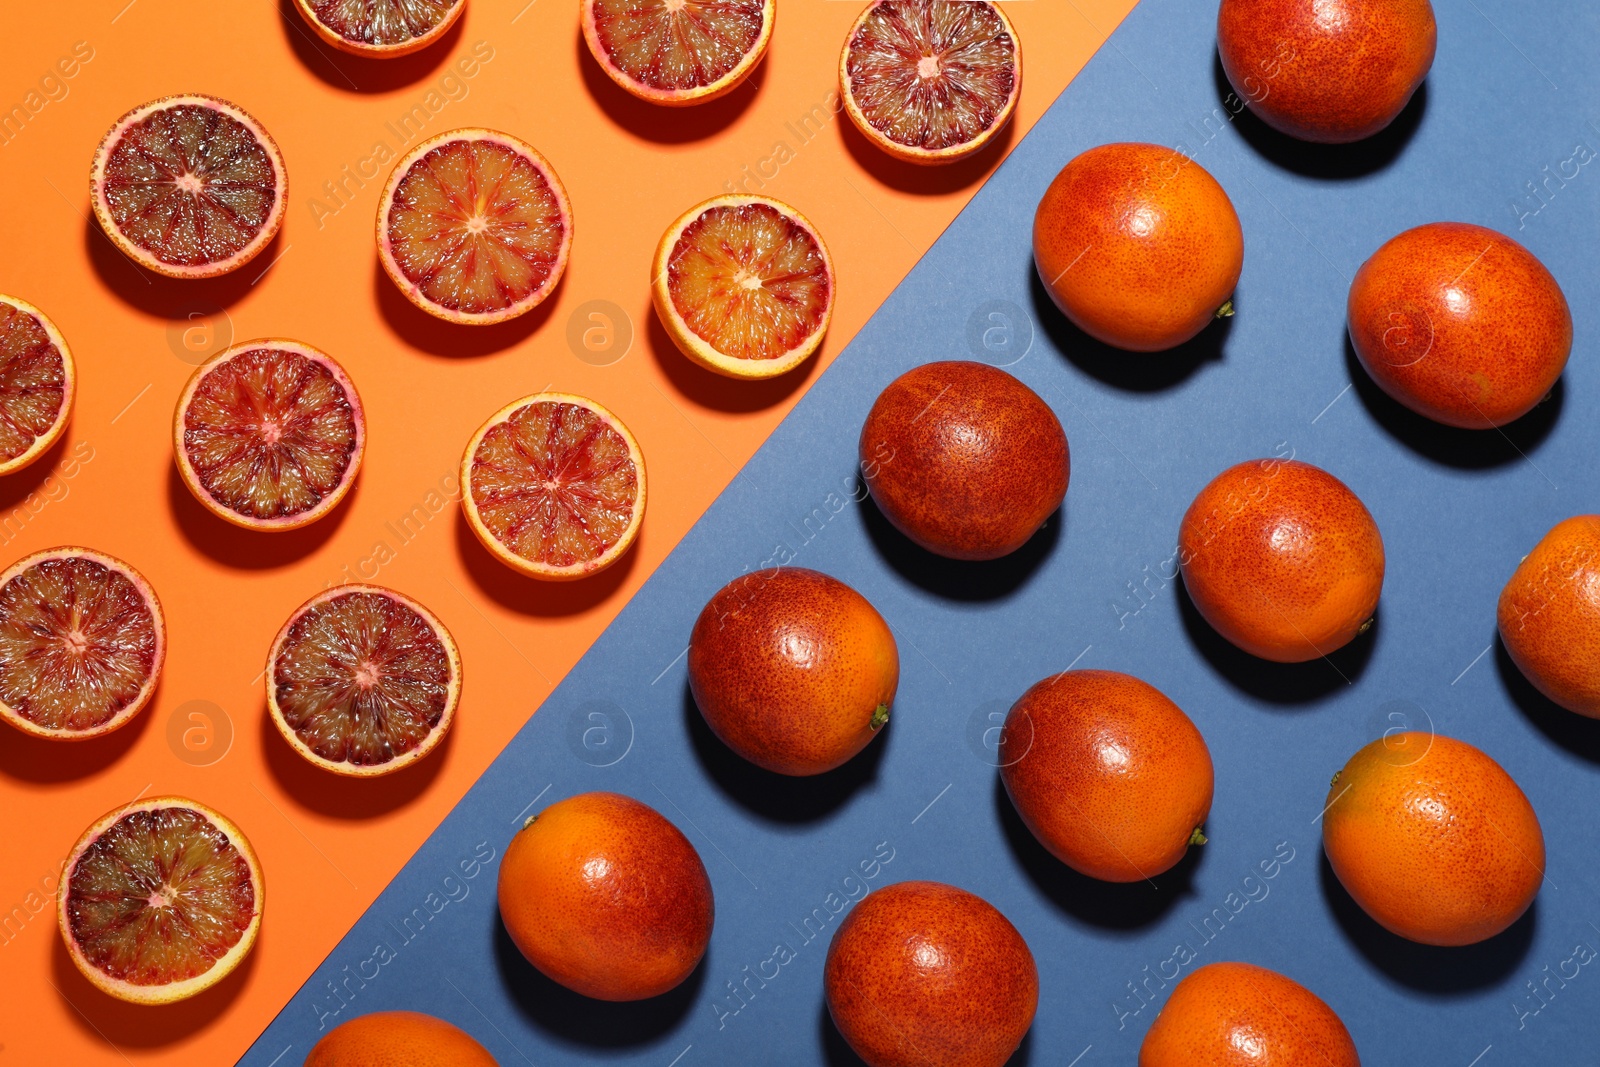 Photo of Many ripe sicilian oranges on color background, flat lay